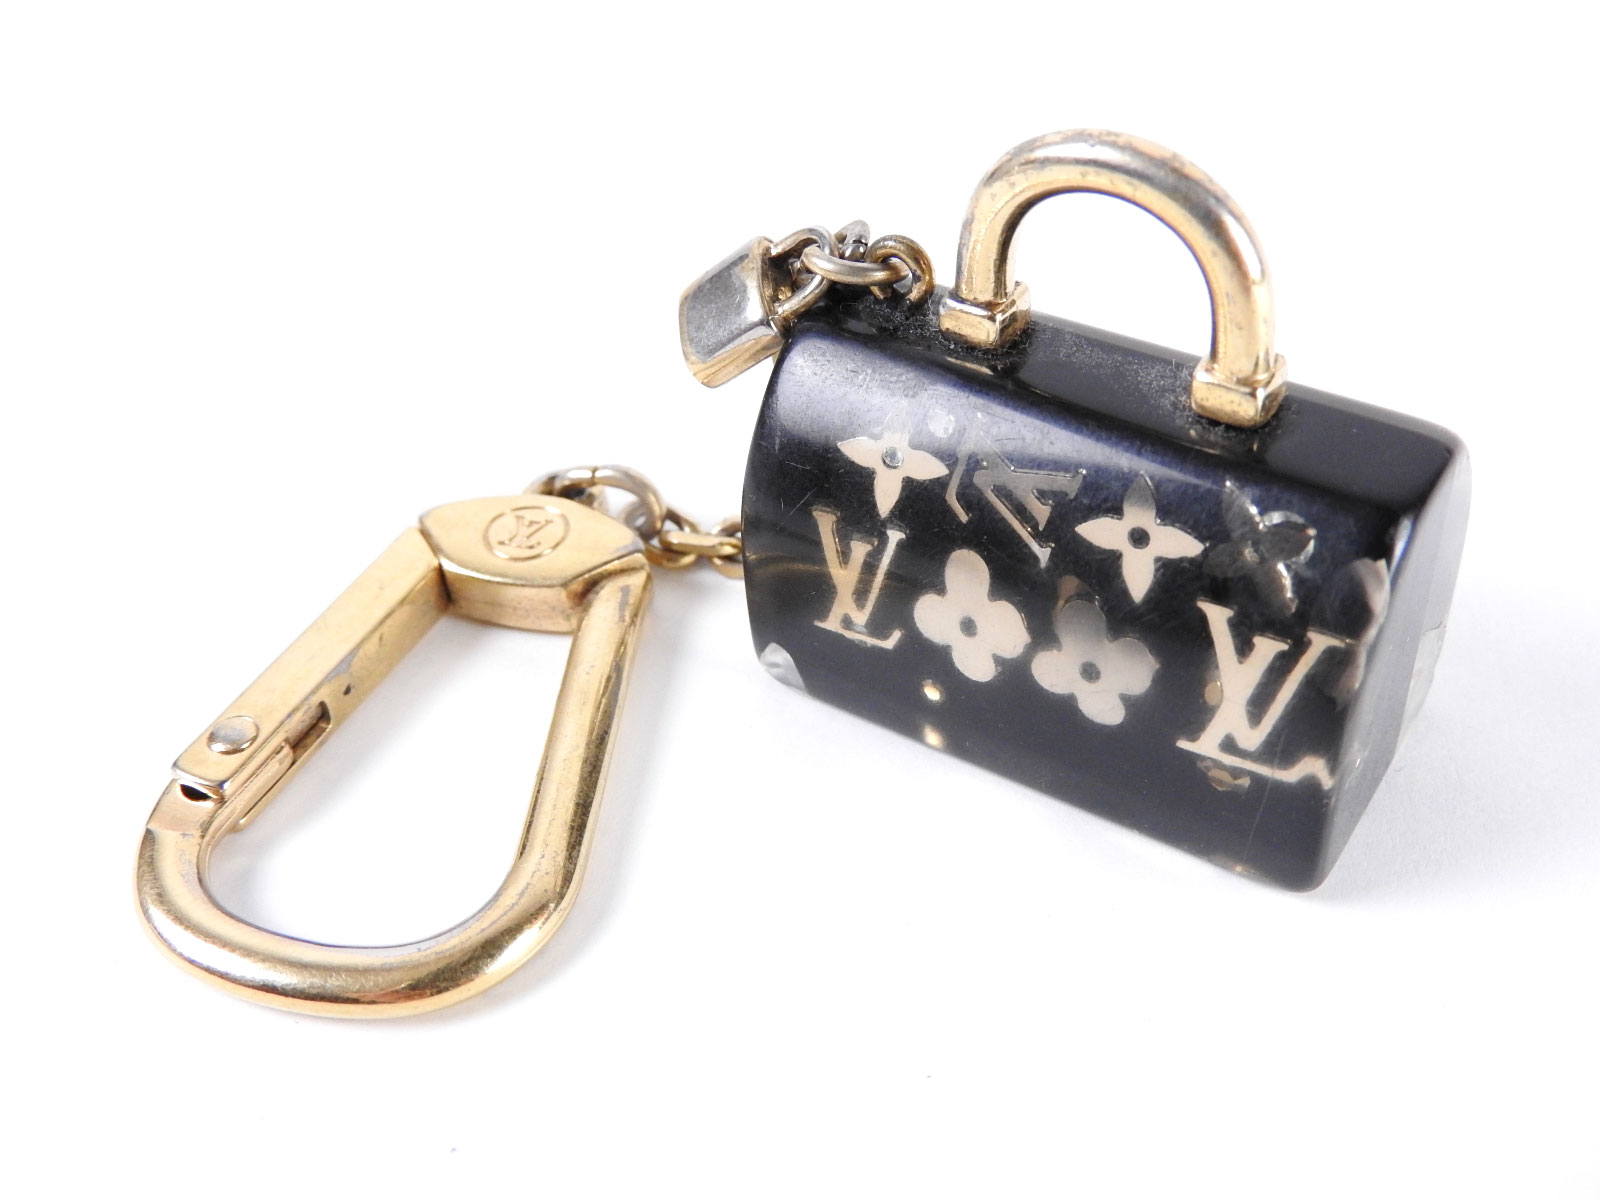 LOUIS VUITTON Porte Cles Speedy Inclusion Key Holder Key Ring Bag Charm M65444 | eBay